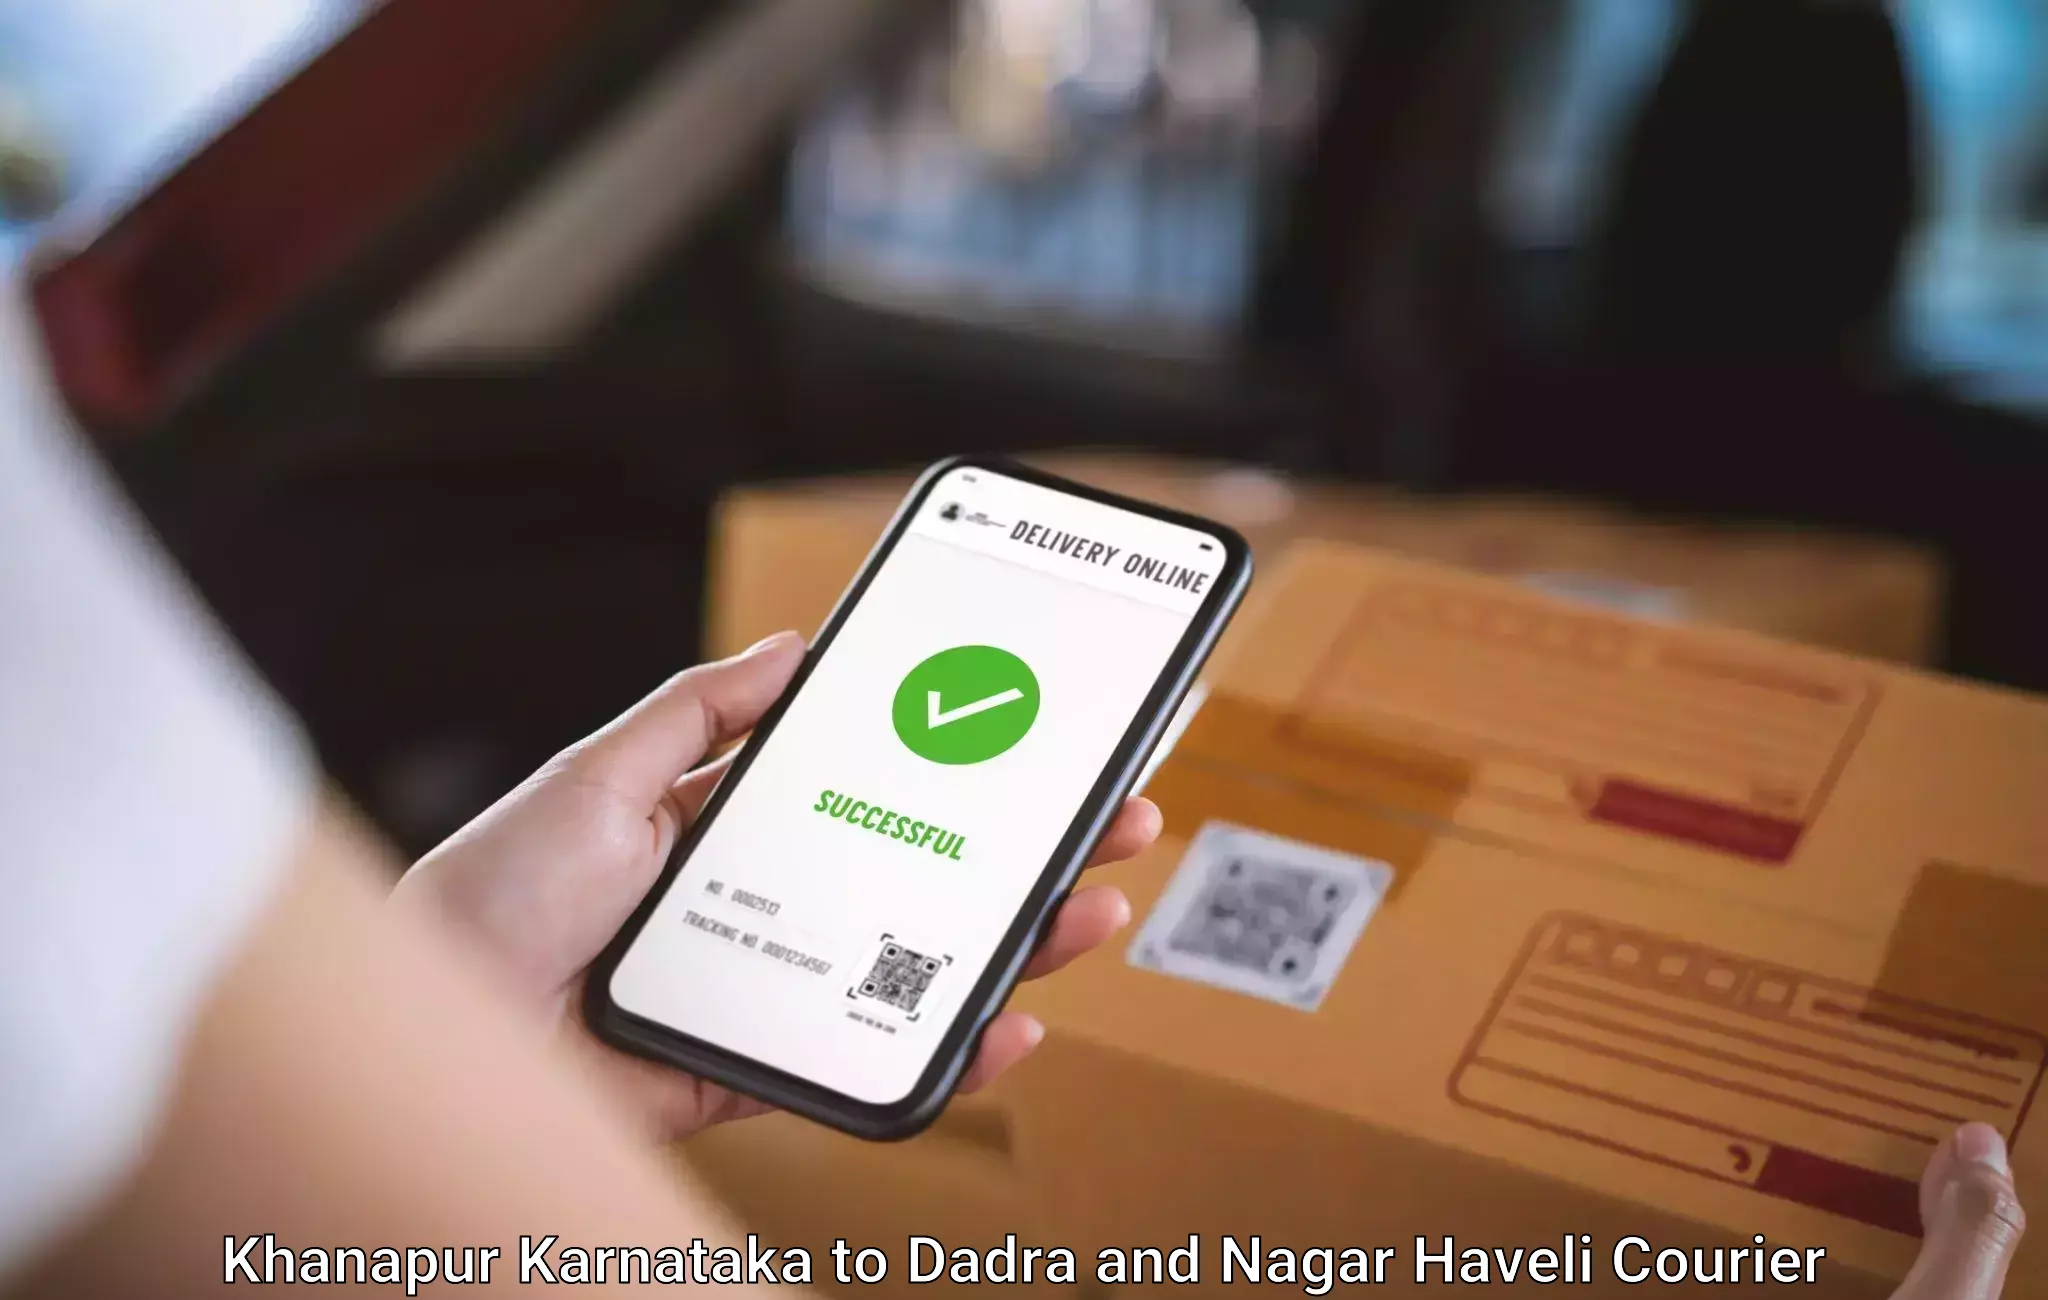 Luggage delivery providers Khanapur Karnataka to Dadra and Nagar Haveli